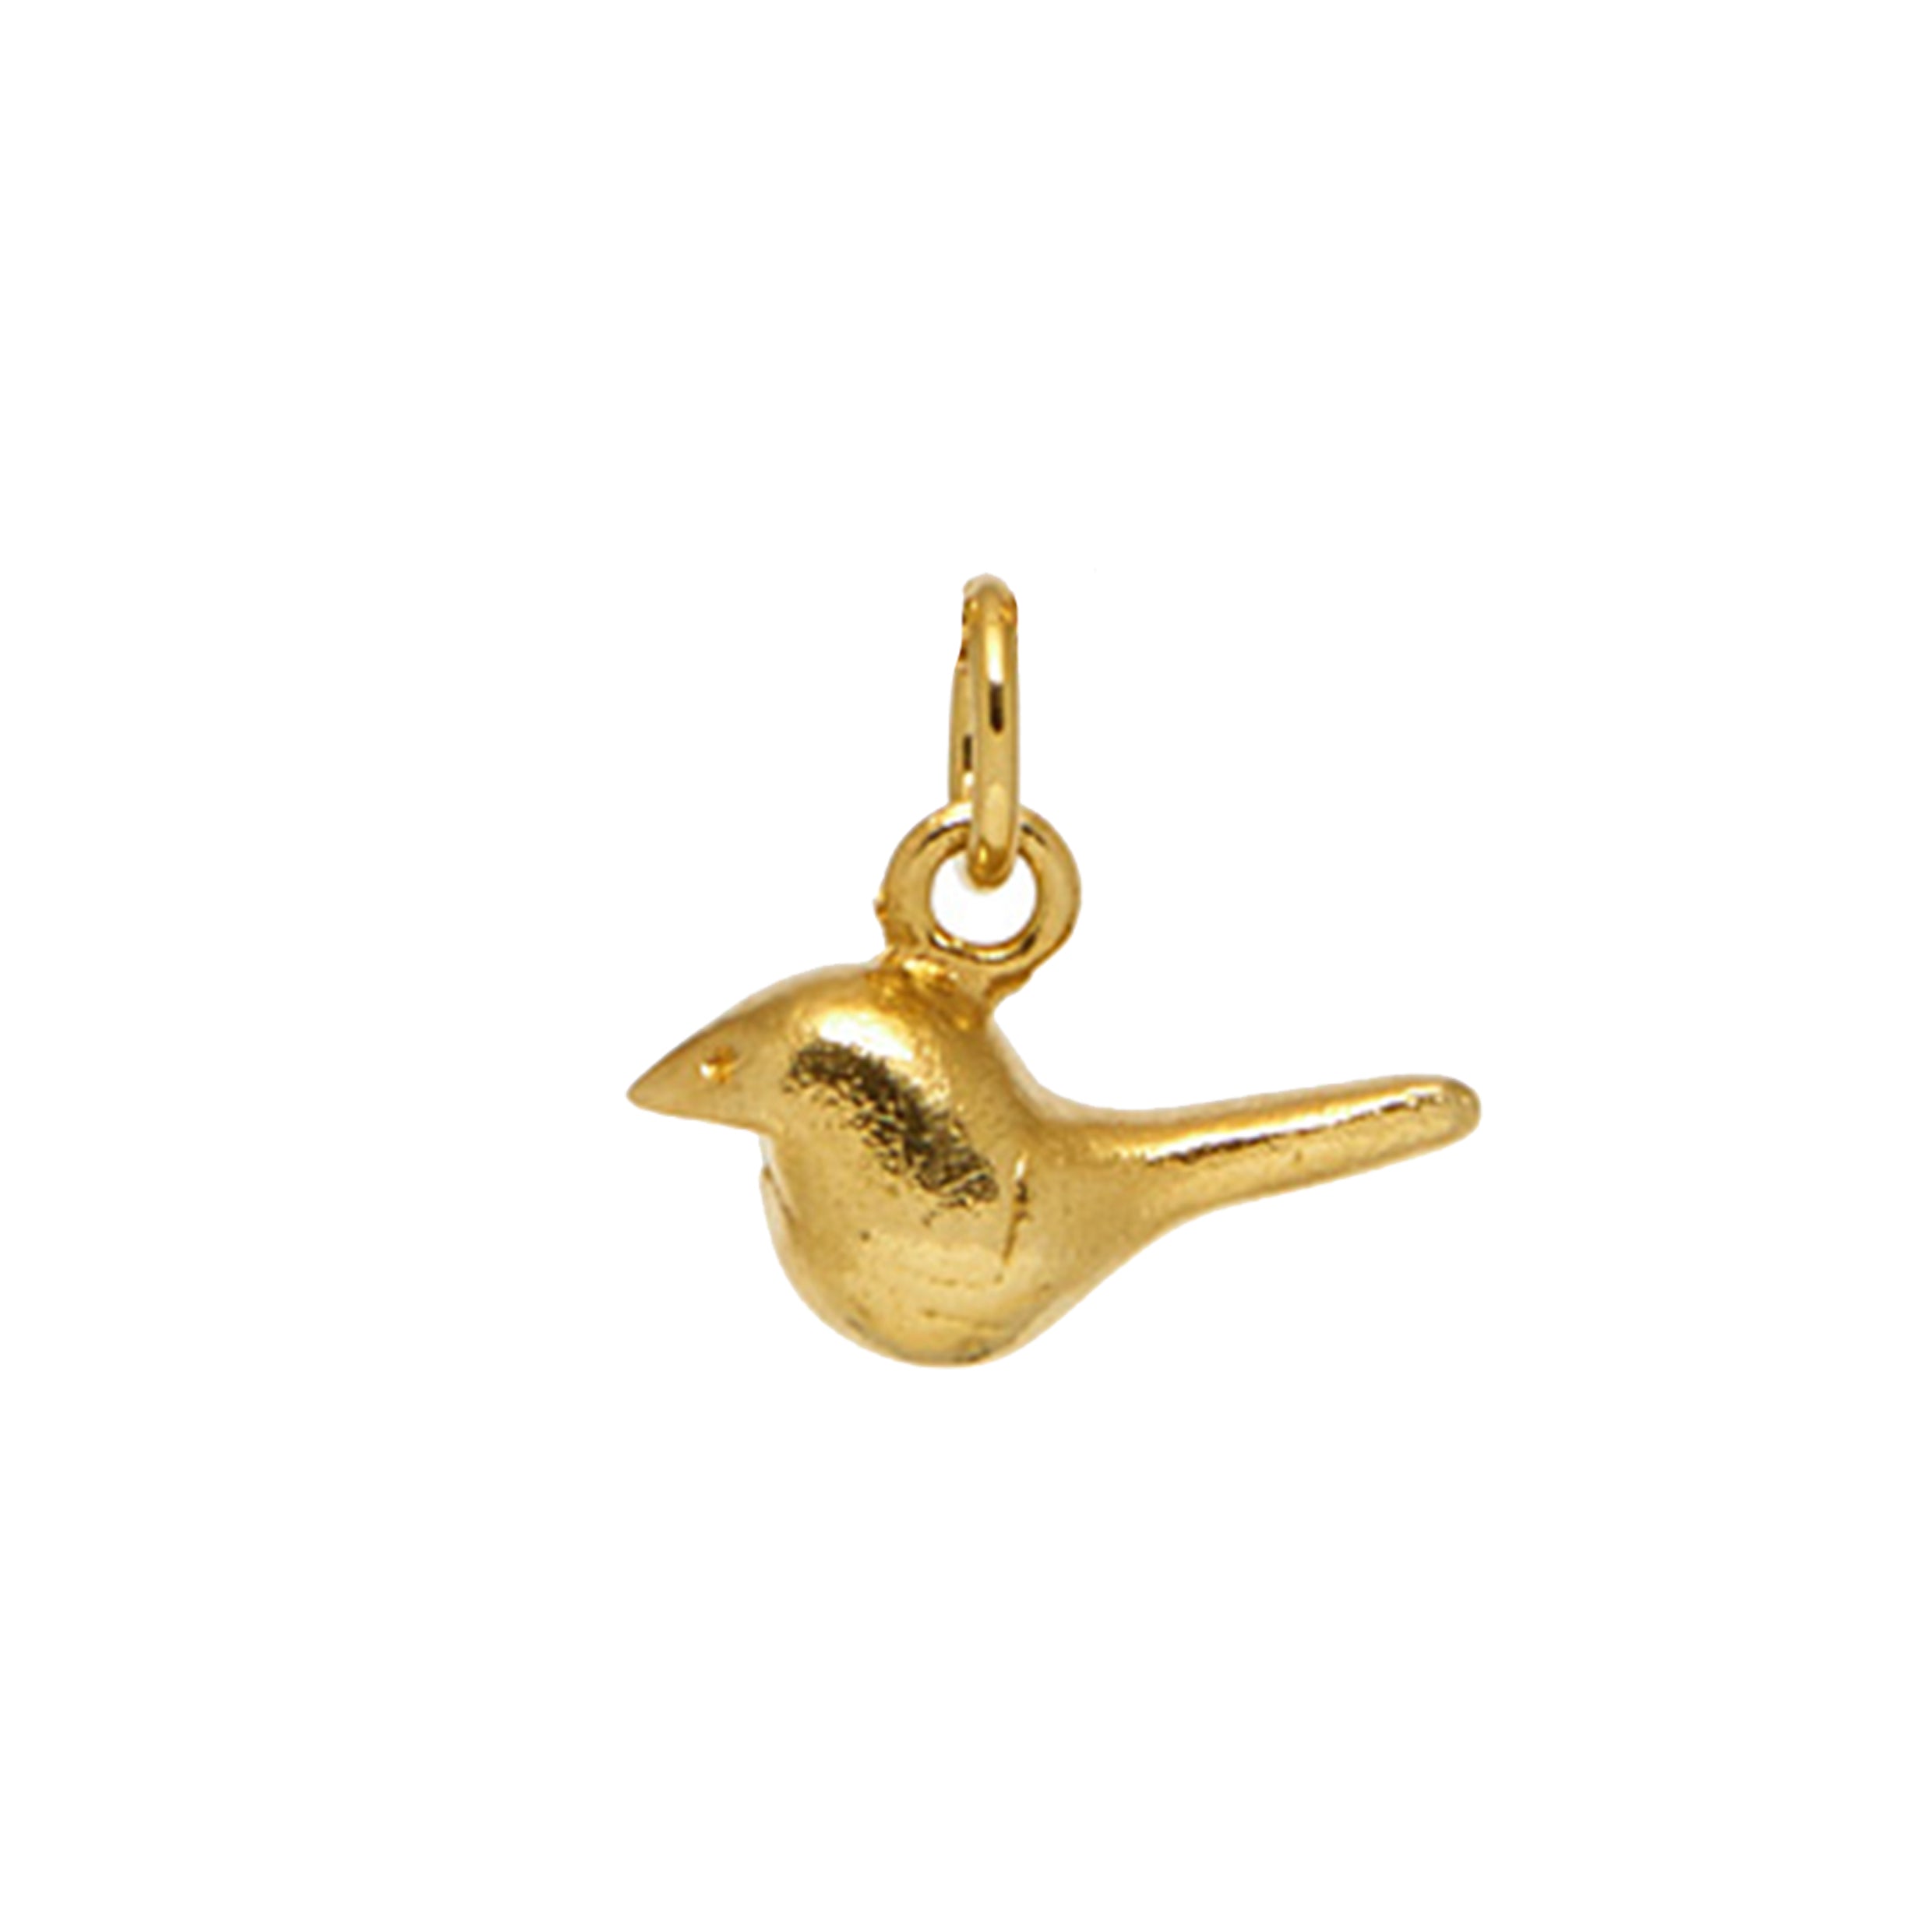 Tiny Bird Charm - Mirabelle Jewellery